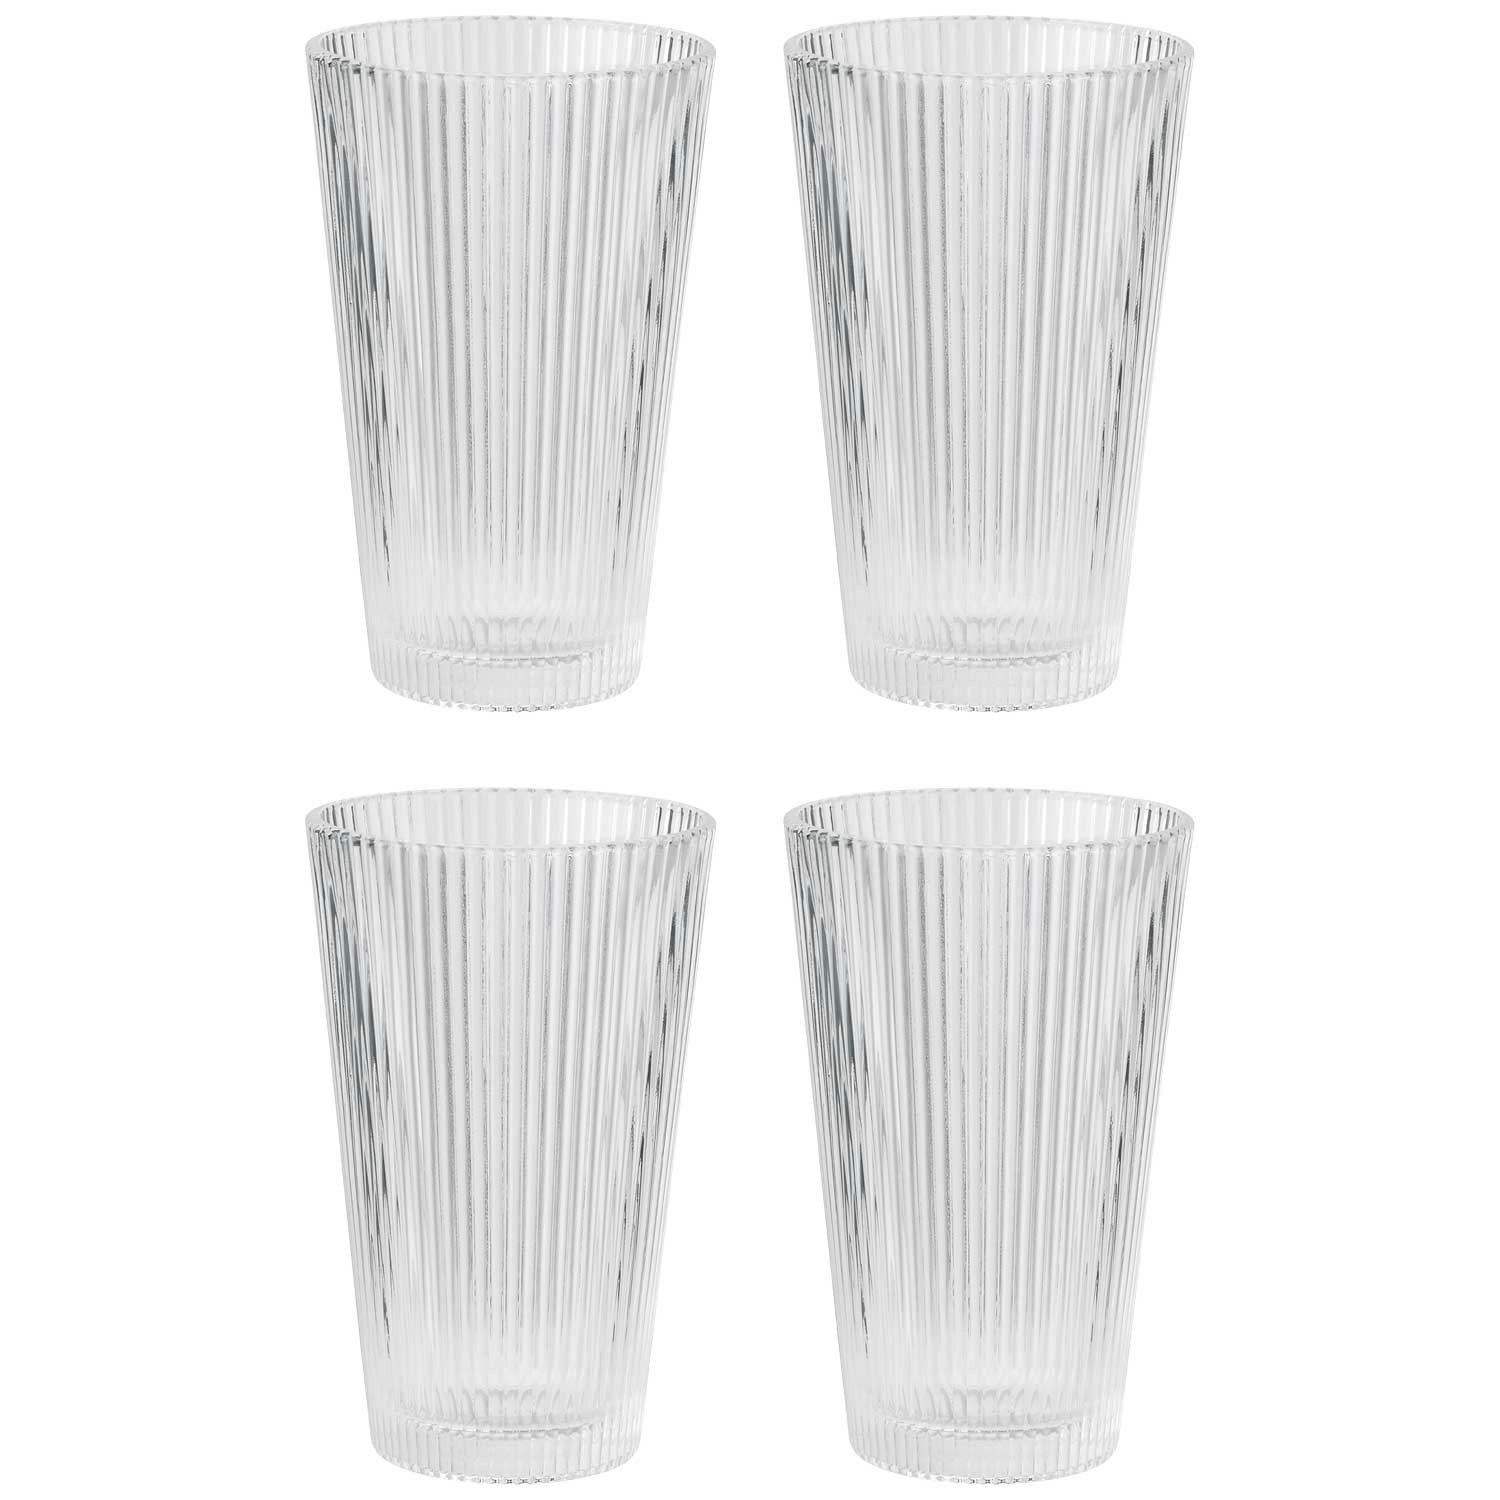 https://royaldesign.com/image/2/stelton-pilastro-drinking-glass-35-cl-4-pack-0